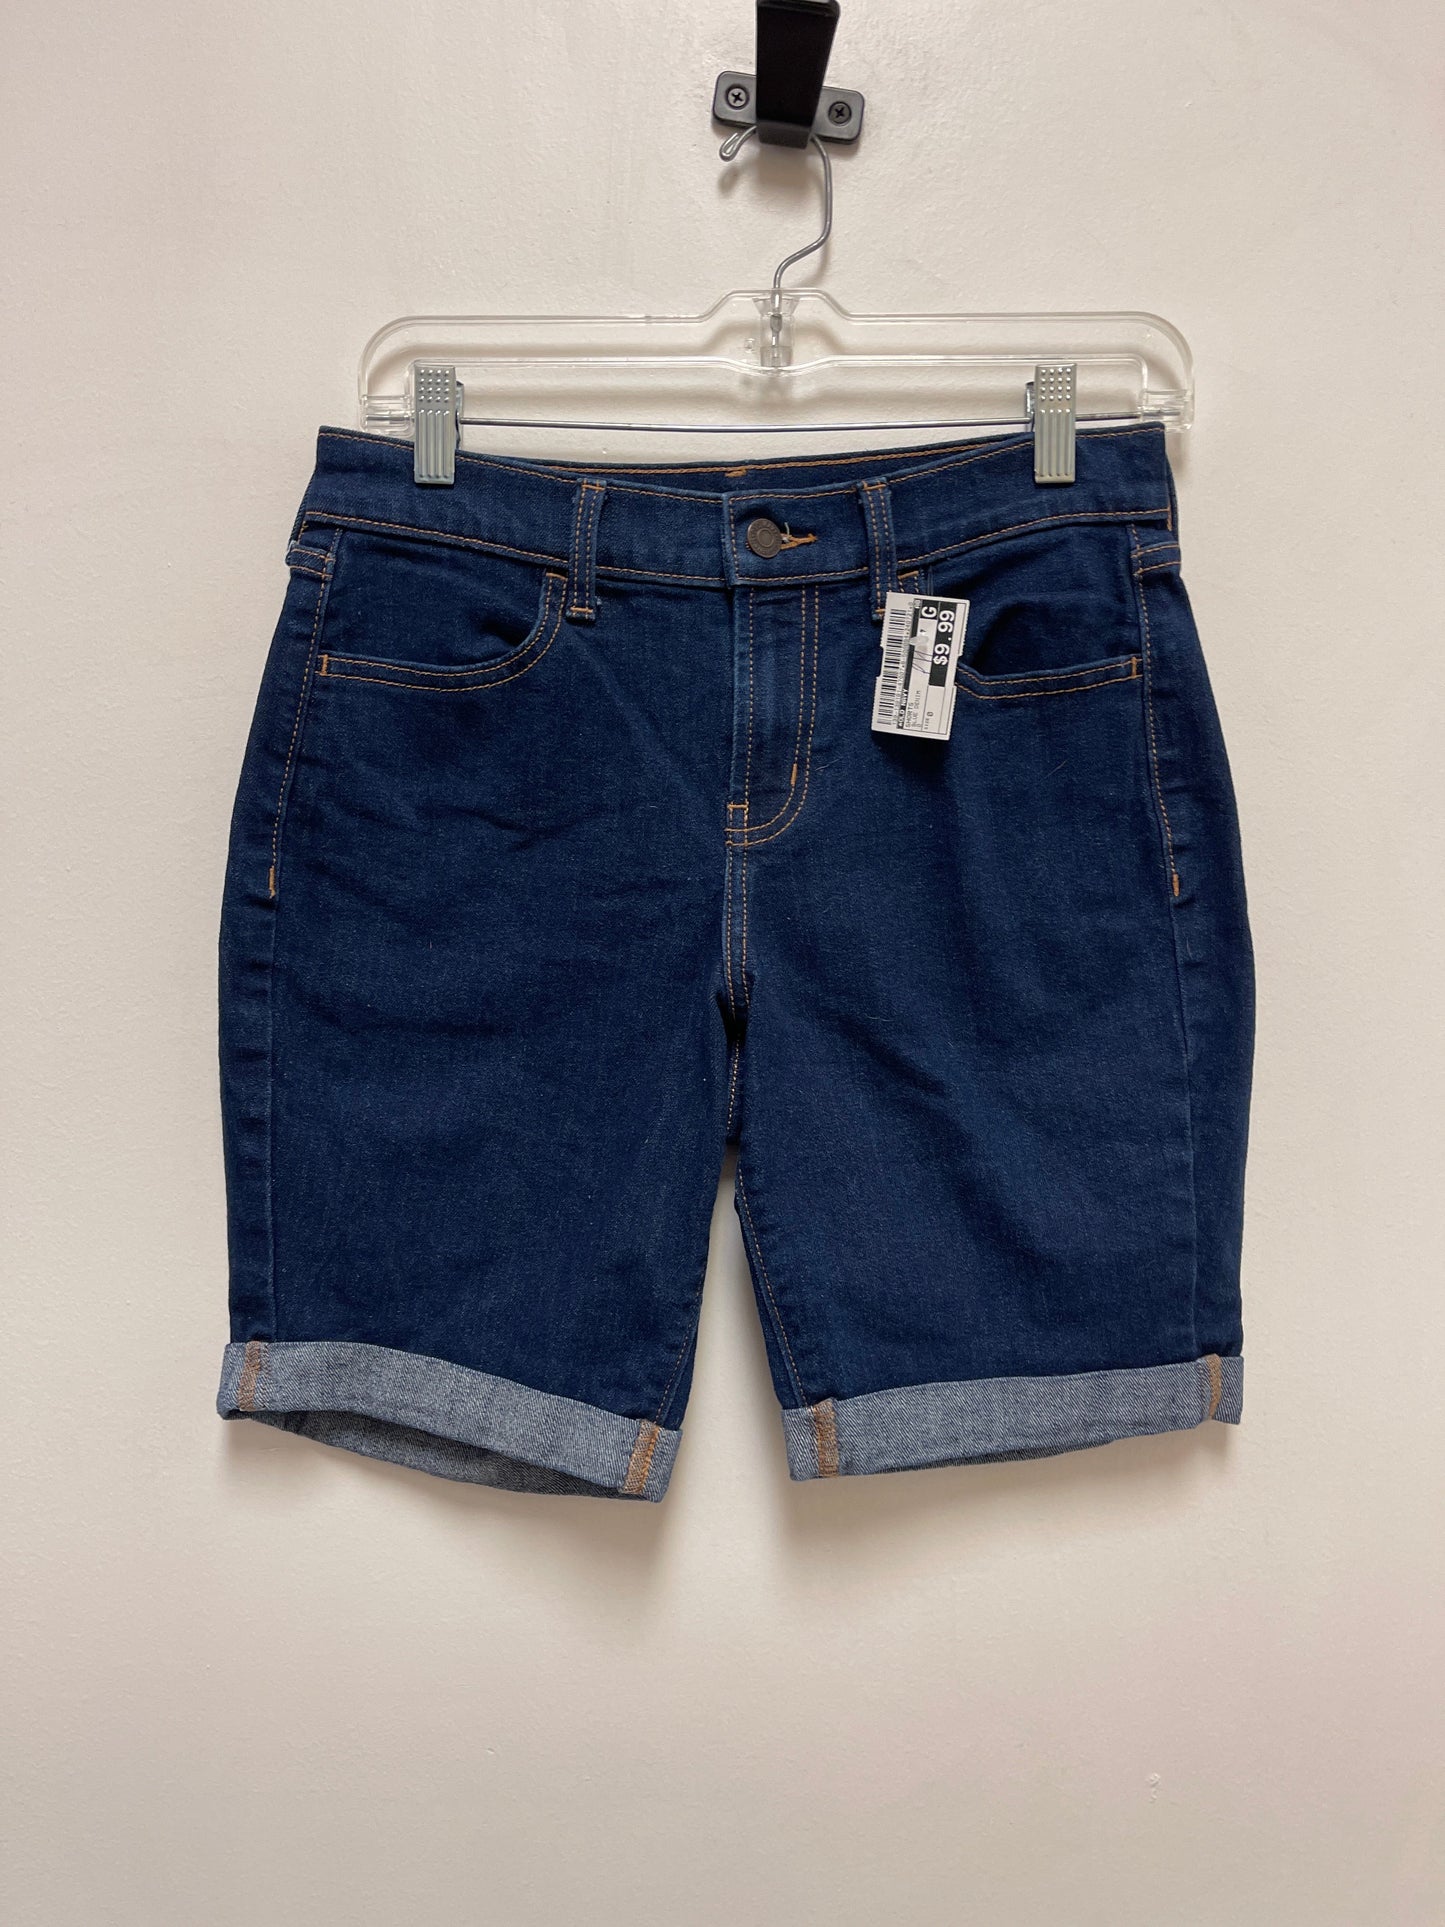 Blue Denim Shorts Old Navy, Size 0